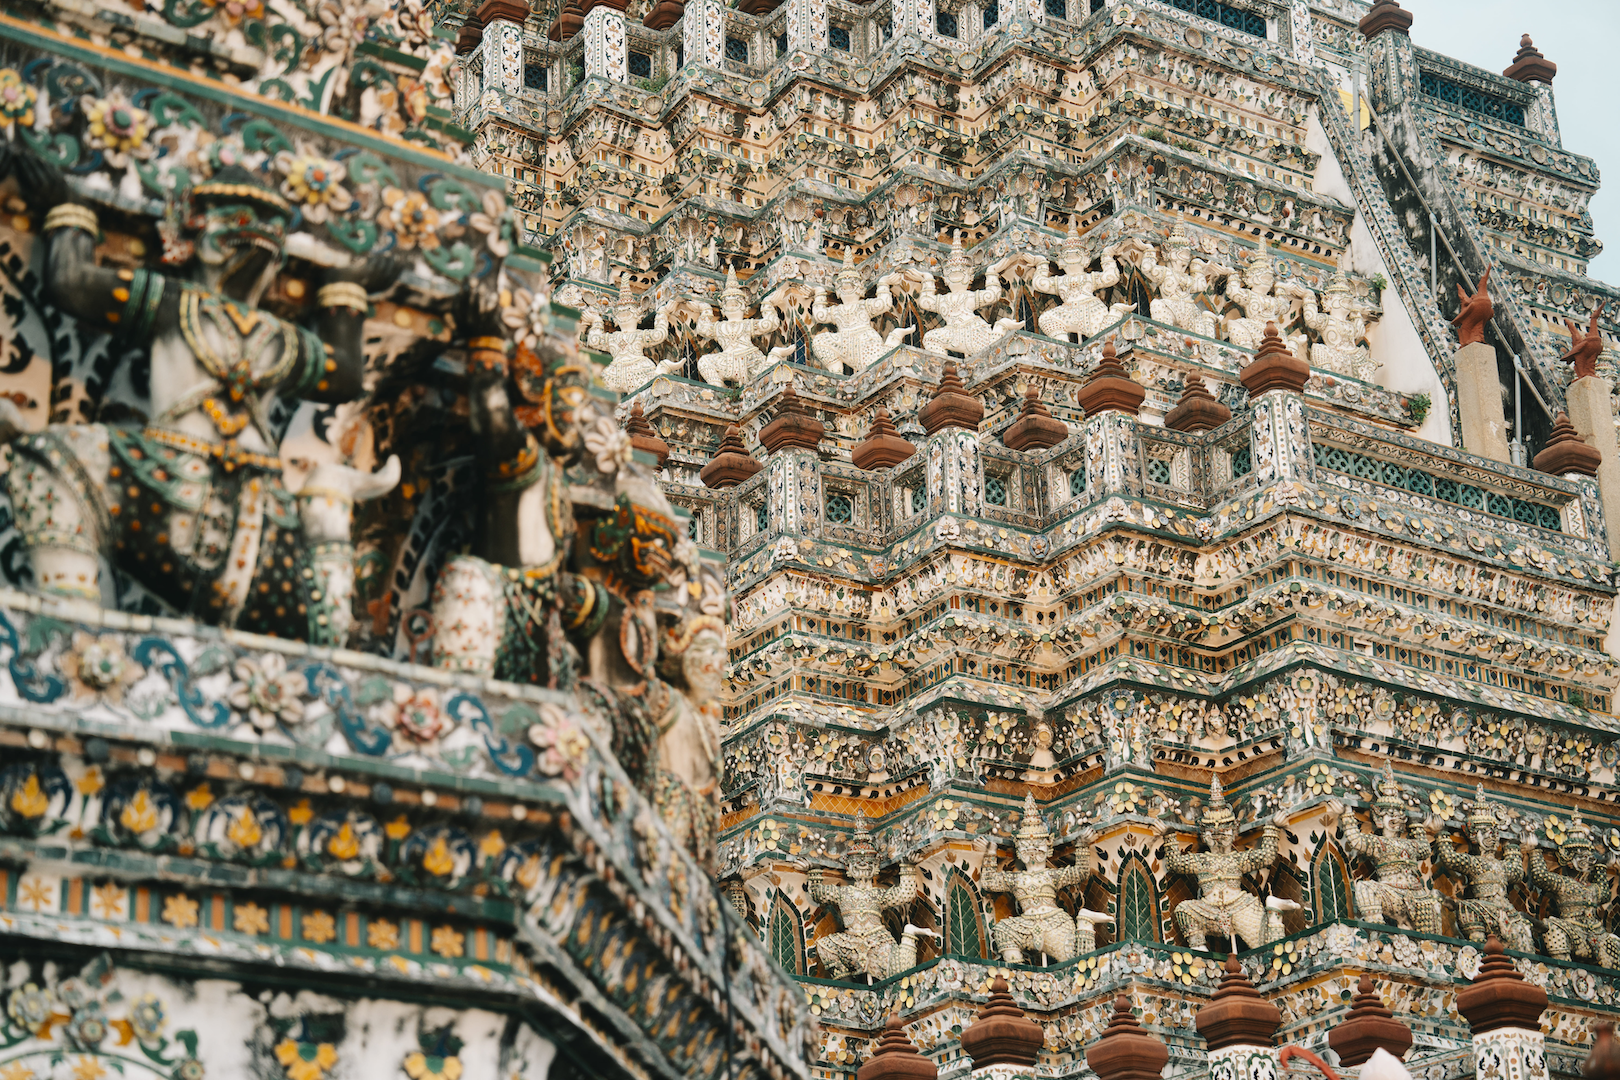 Rich facade details of the Wat Arun temple